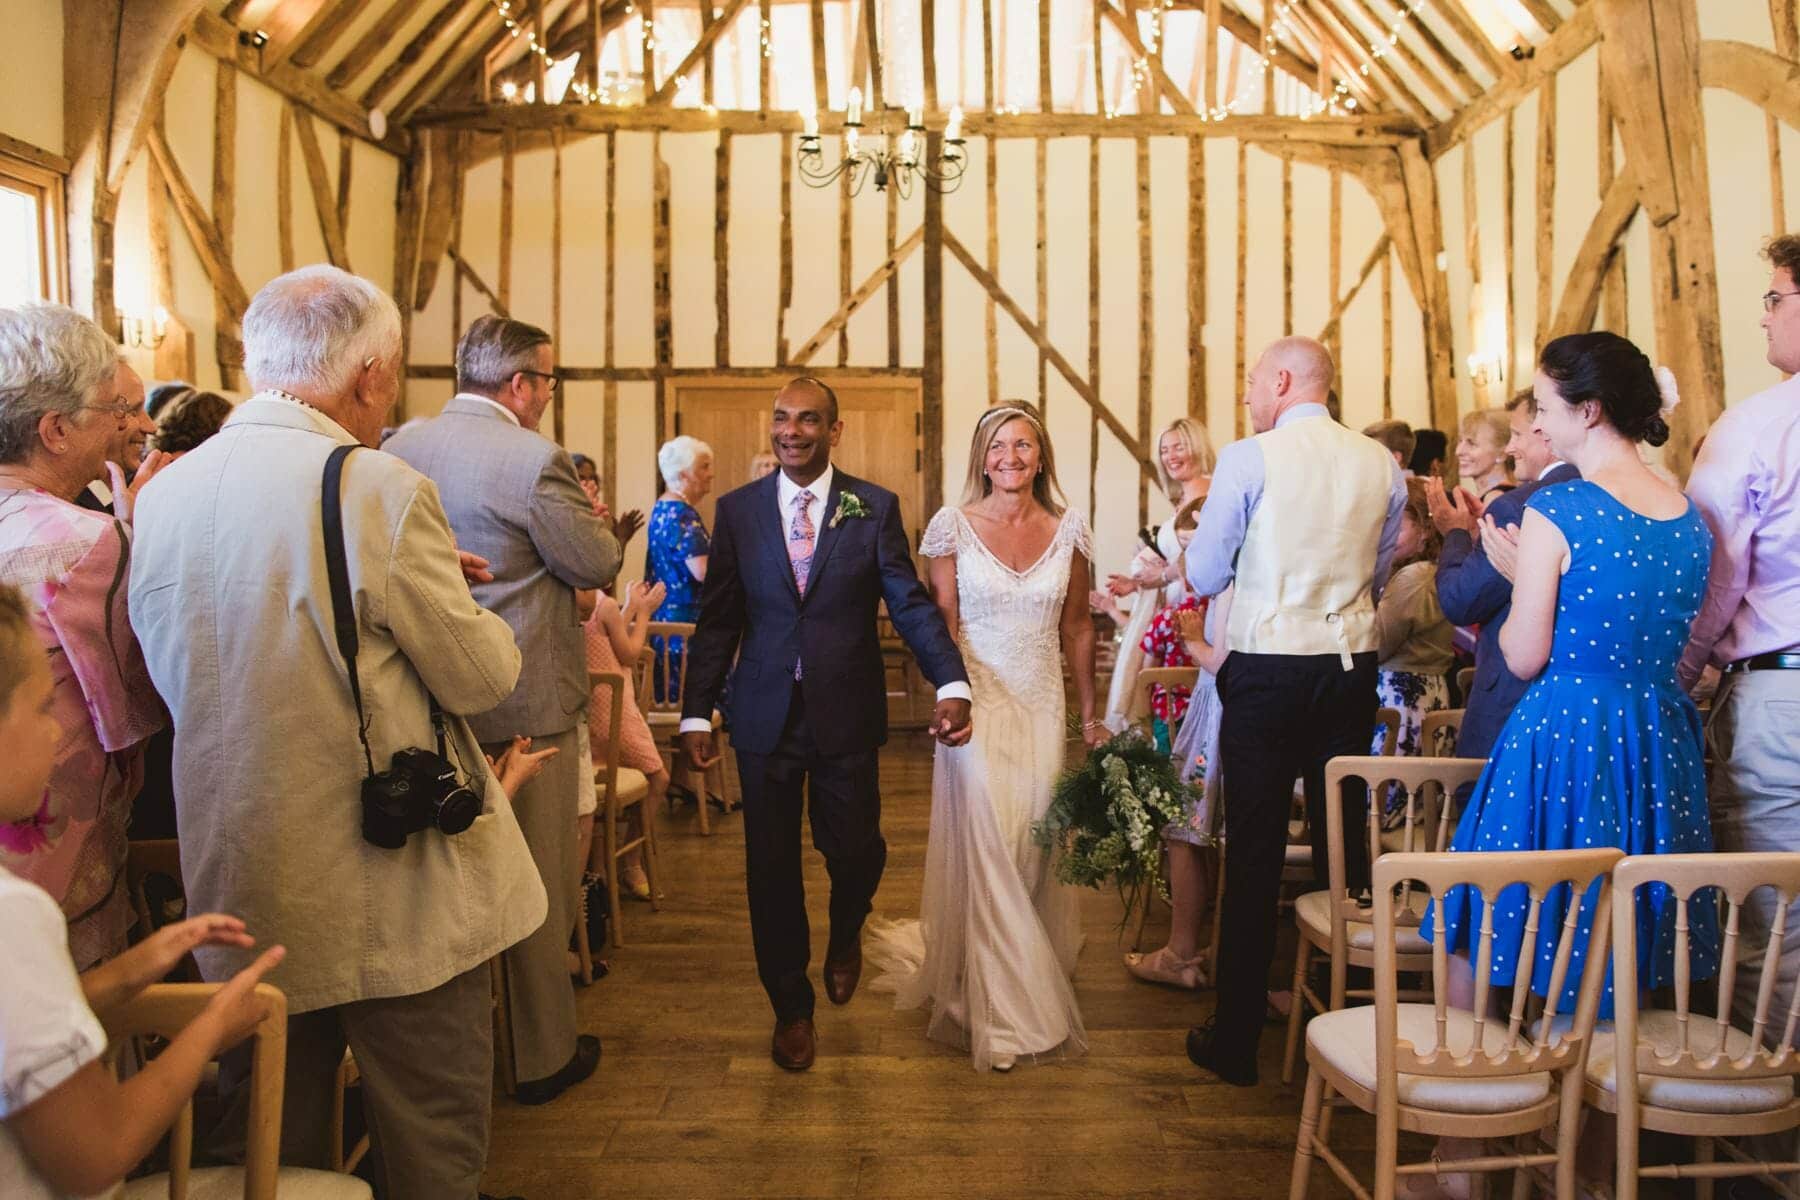 Bruisyard Hall and Barn wedding photography ceremony